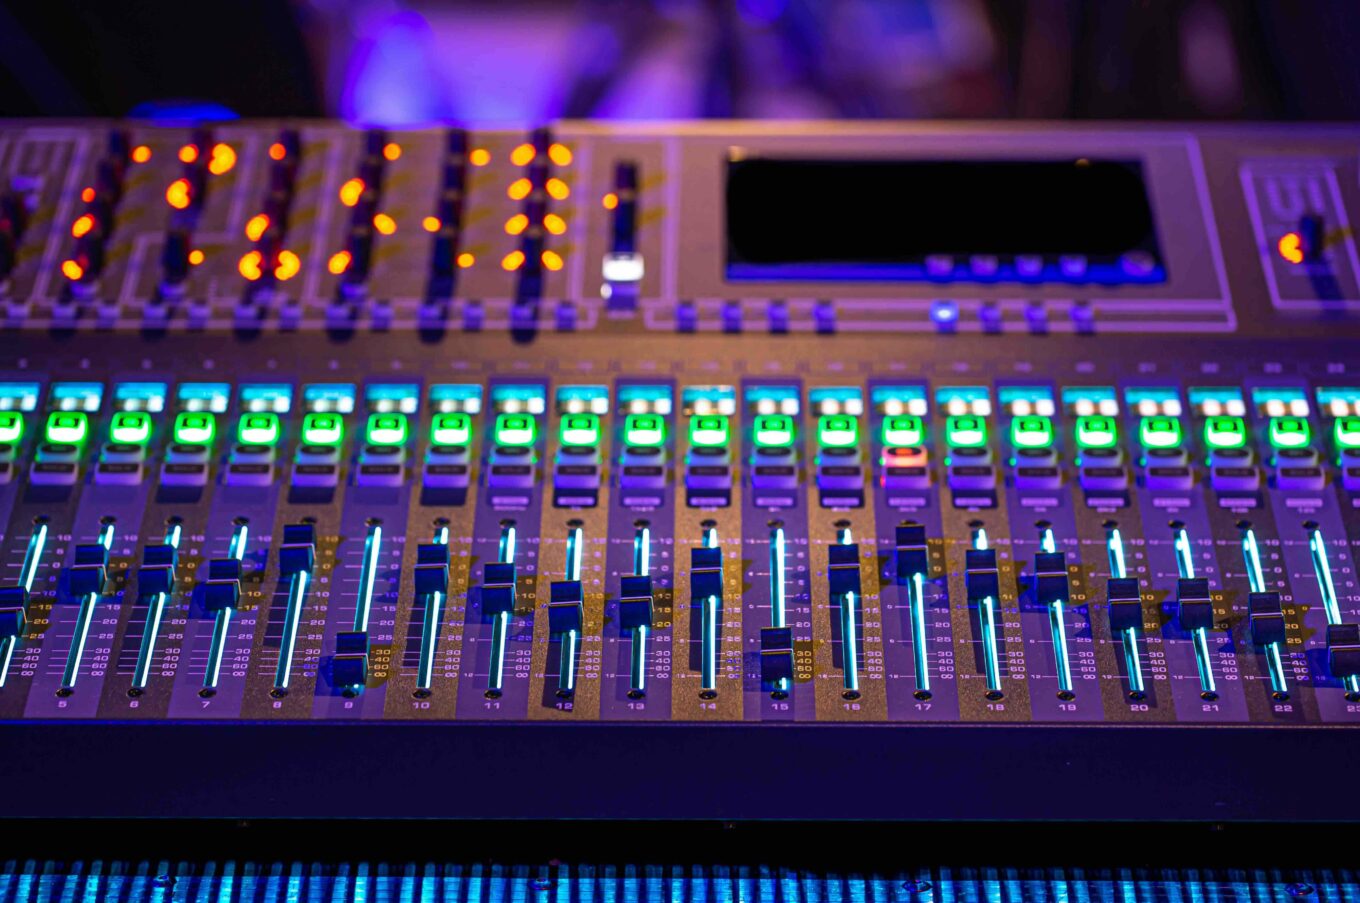 Digital mixer in recording studio by puhimec